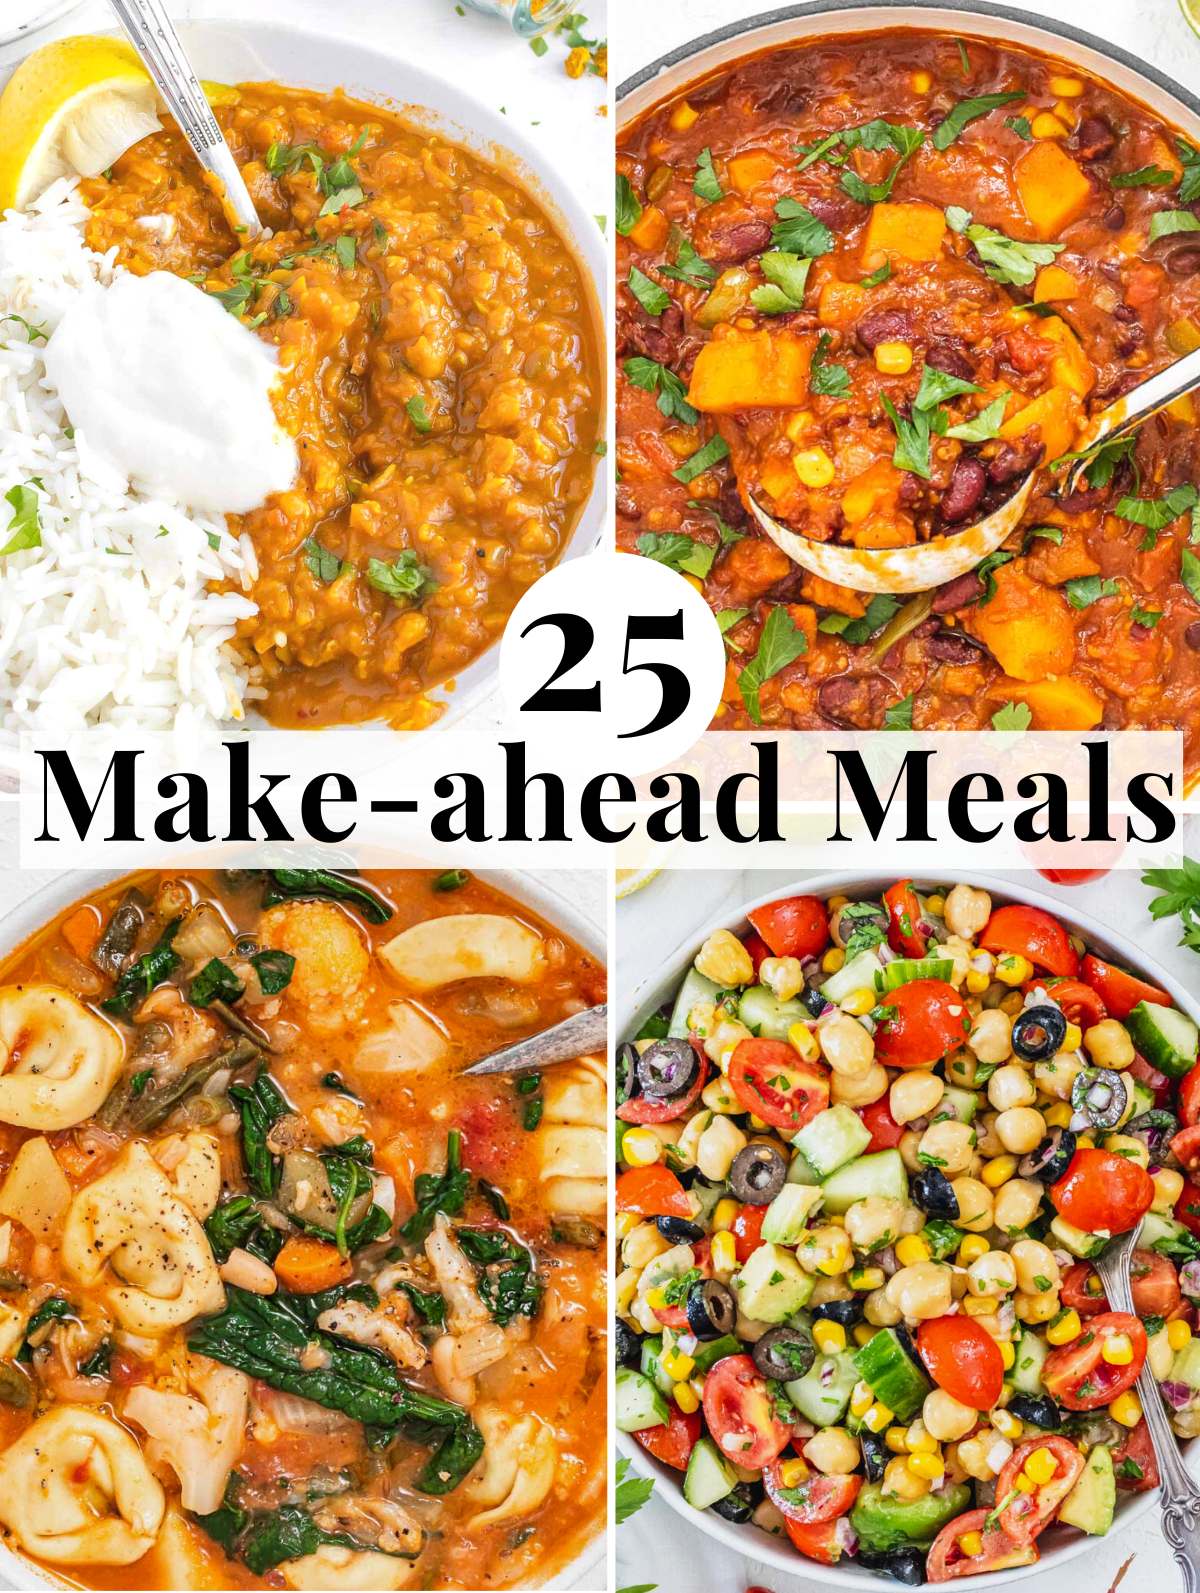 25 Make-ahead meals